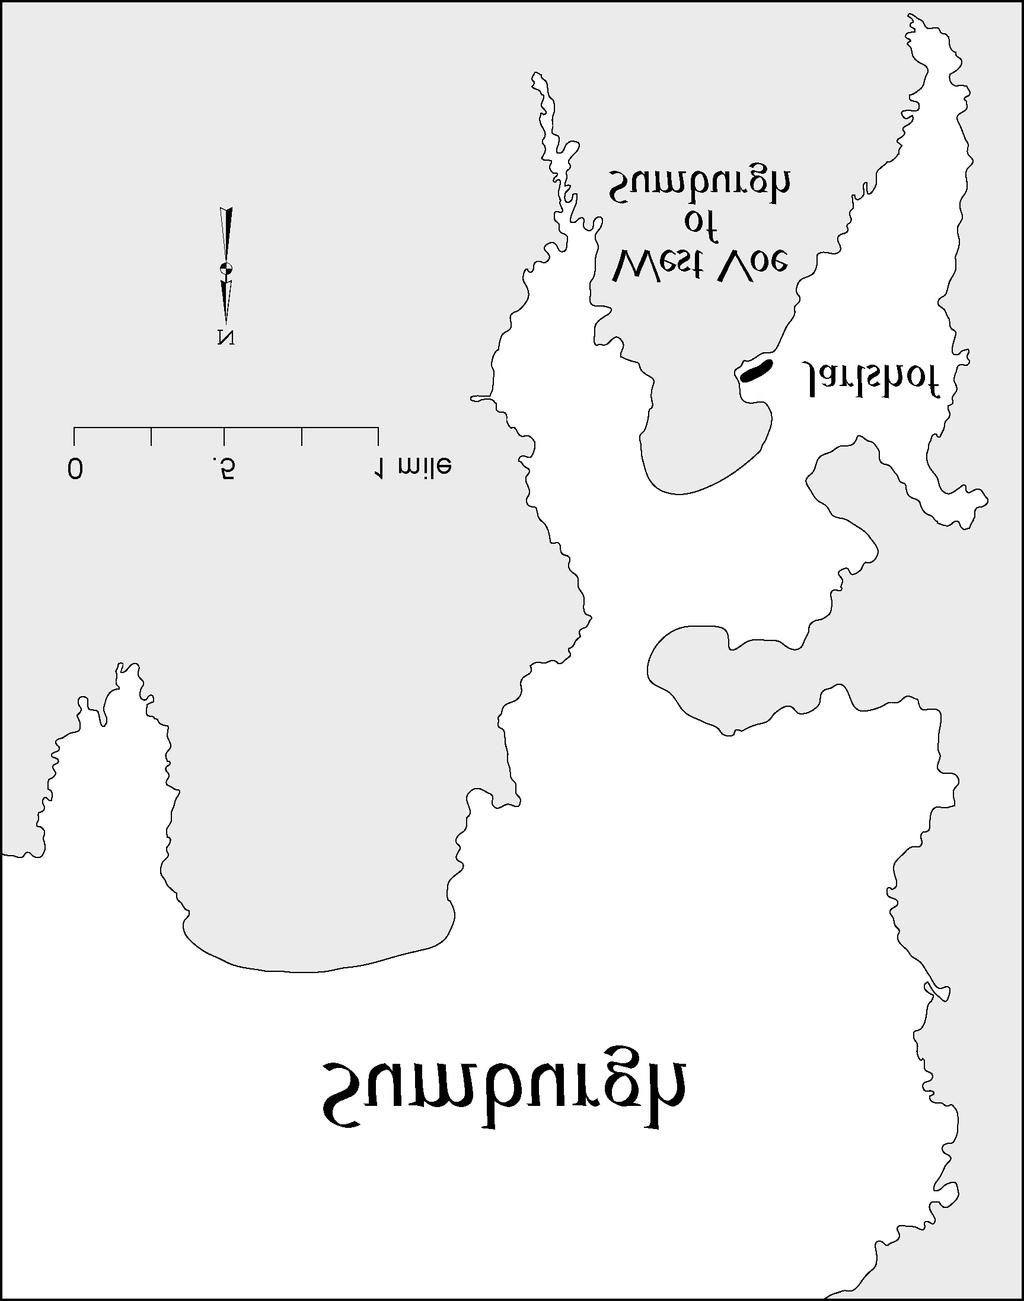 Figure 11. Jarlshof location (redrawn after Hamilton 1956:2) 5.